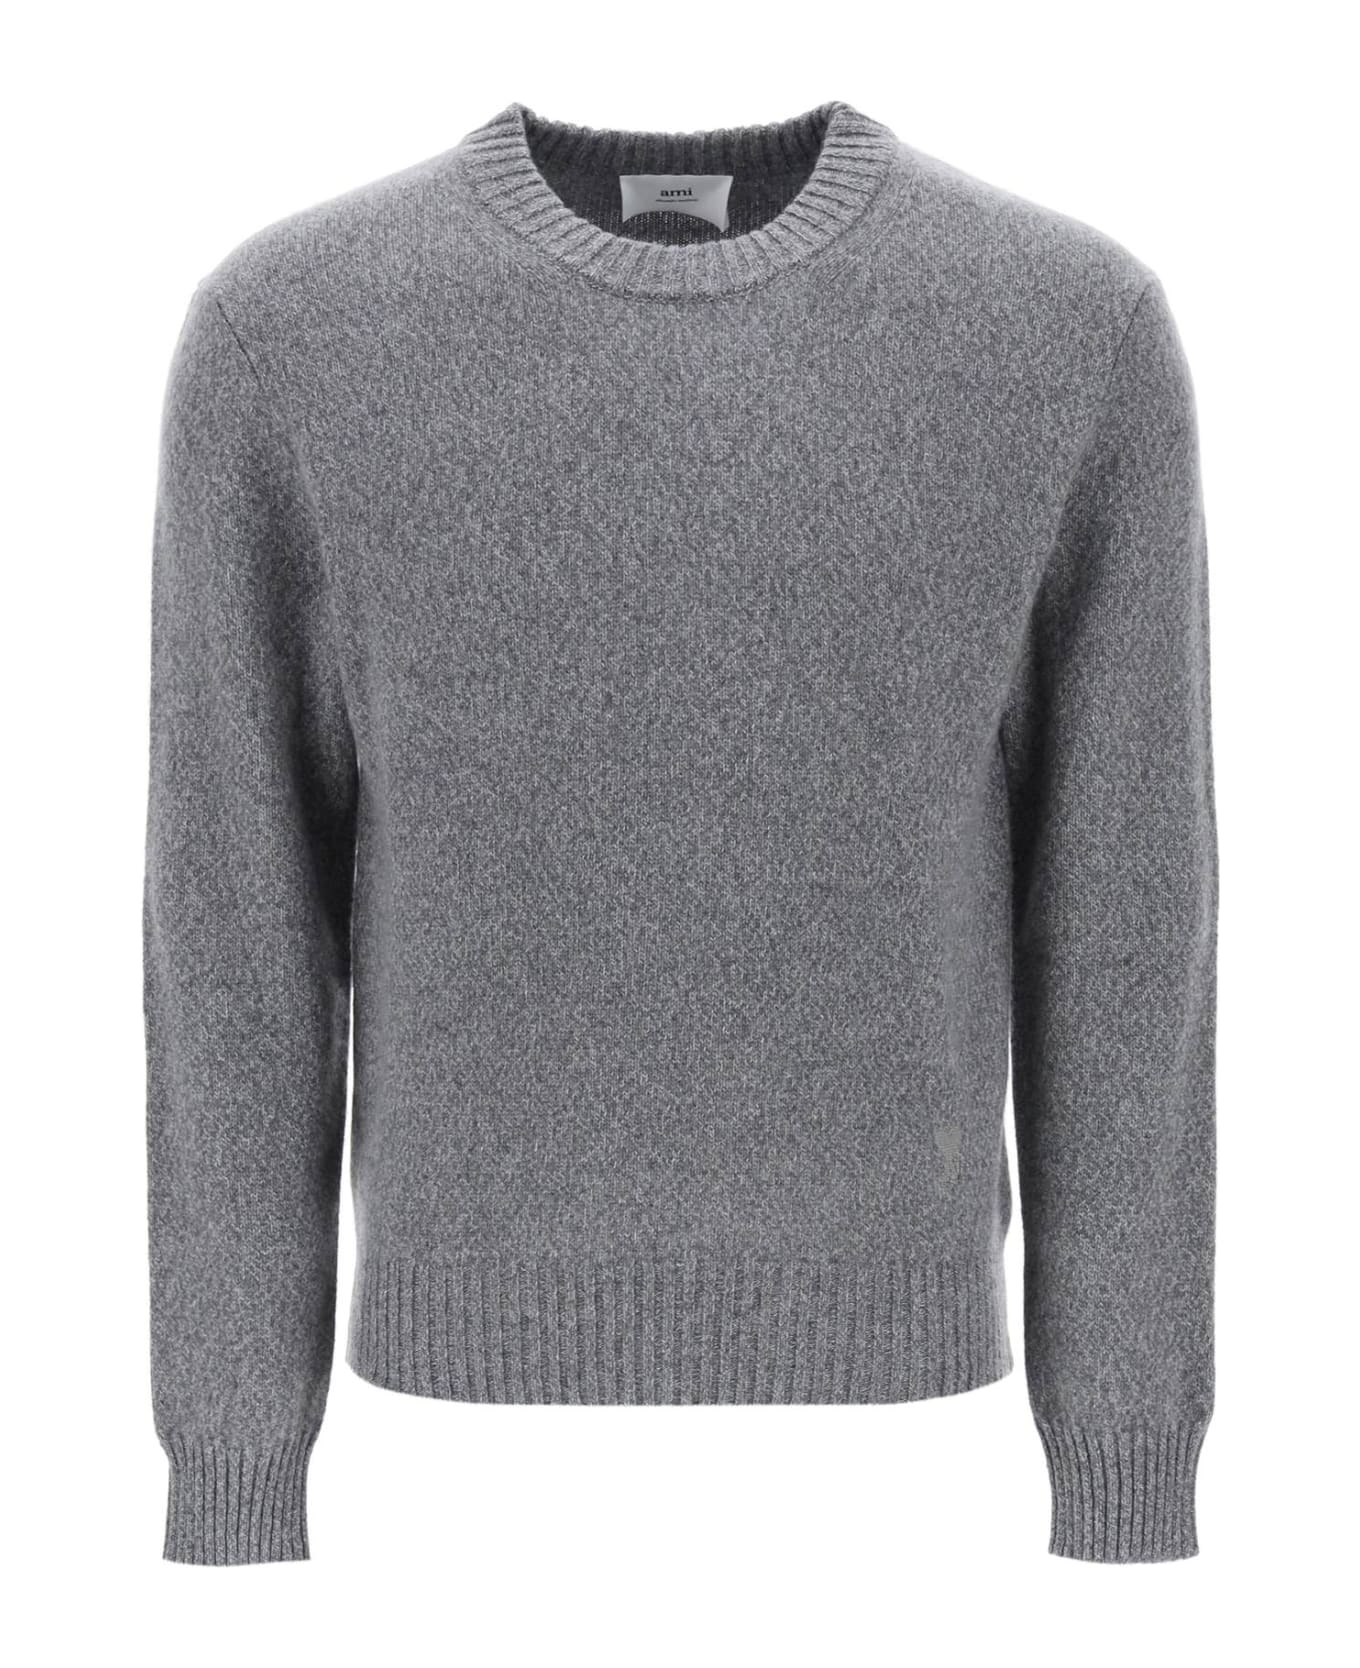 Ami Alexandre Mattiussi Cashmere And Wool Sweater - HEATHER GREY (Grey)